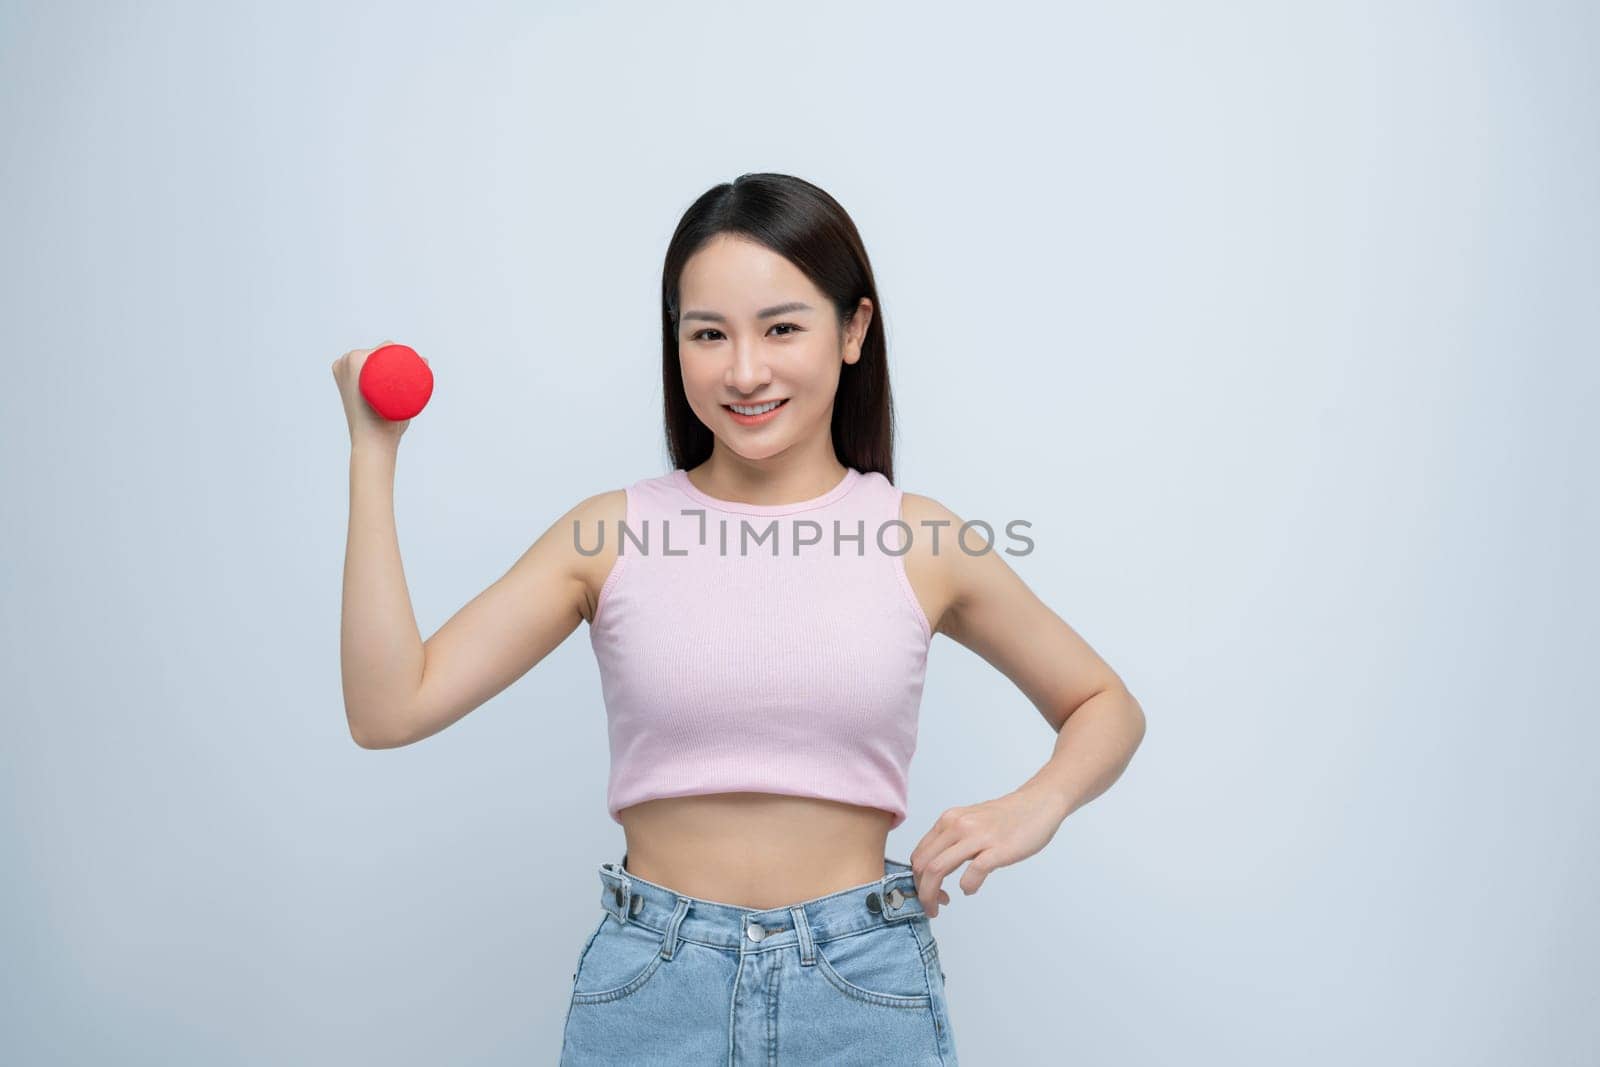 Young asian woman lifting dumbbells